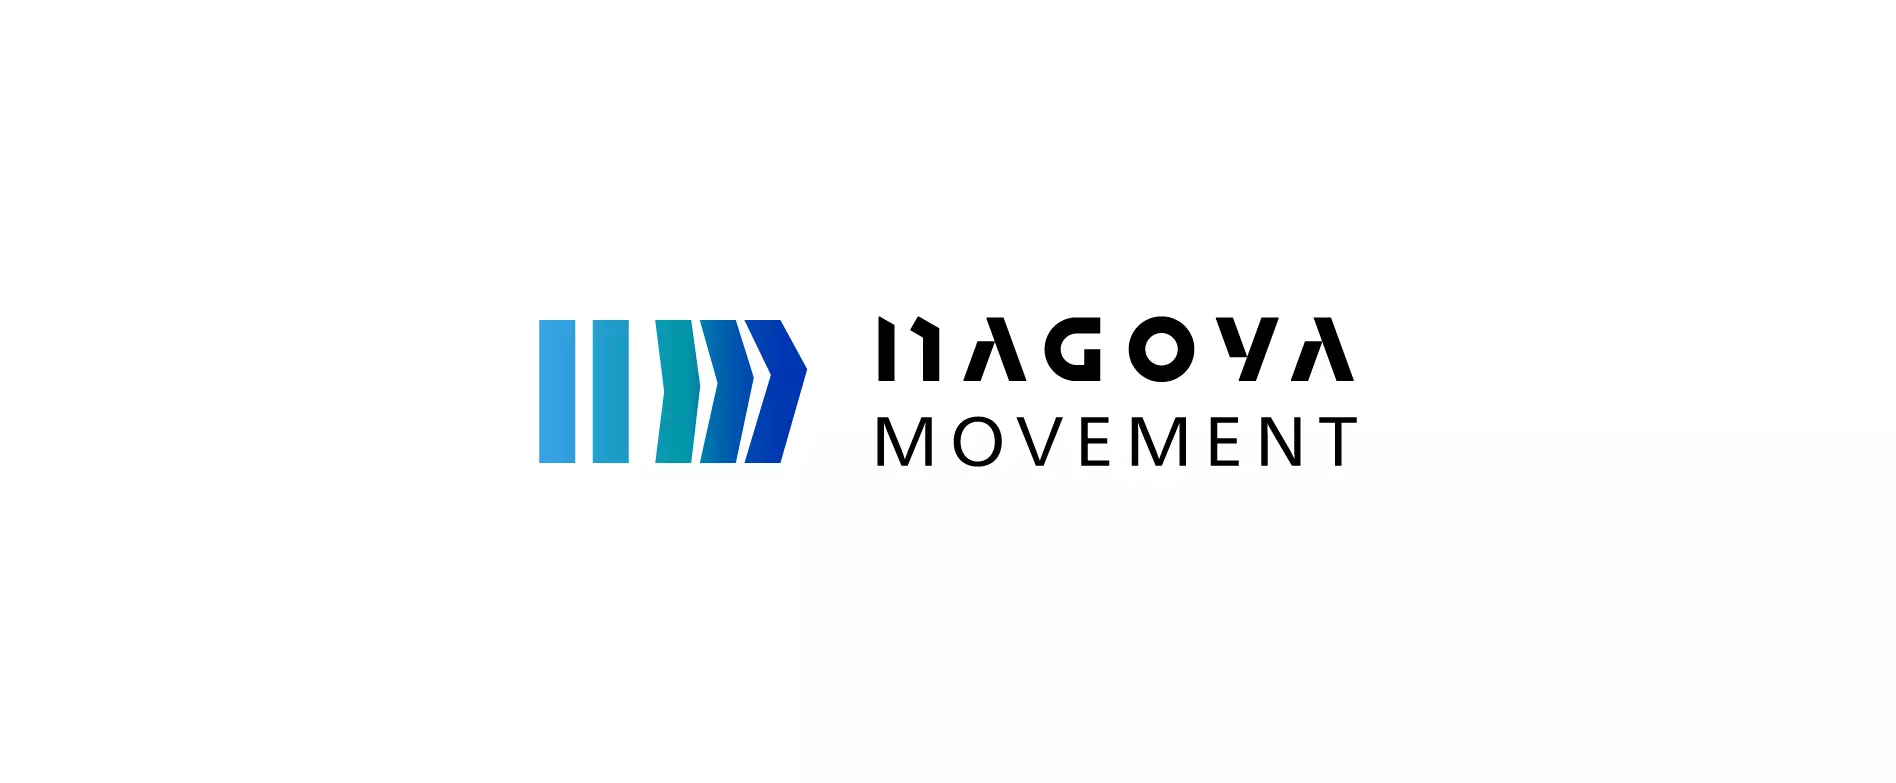 Nagoya Movementデザイン